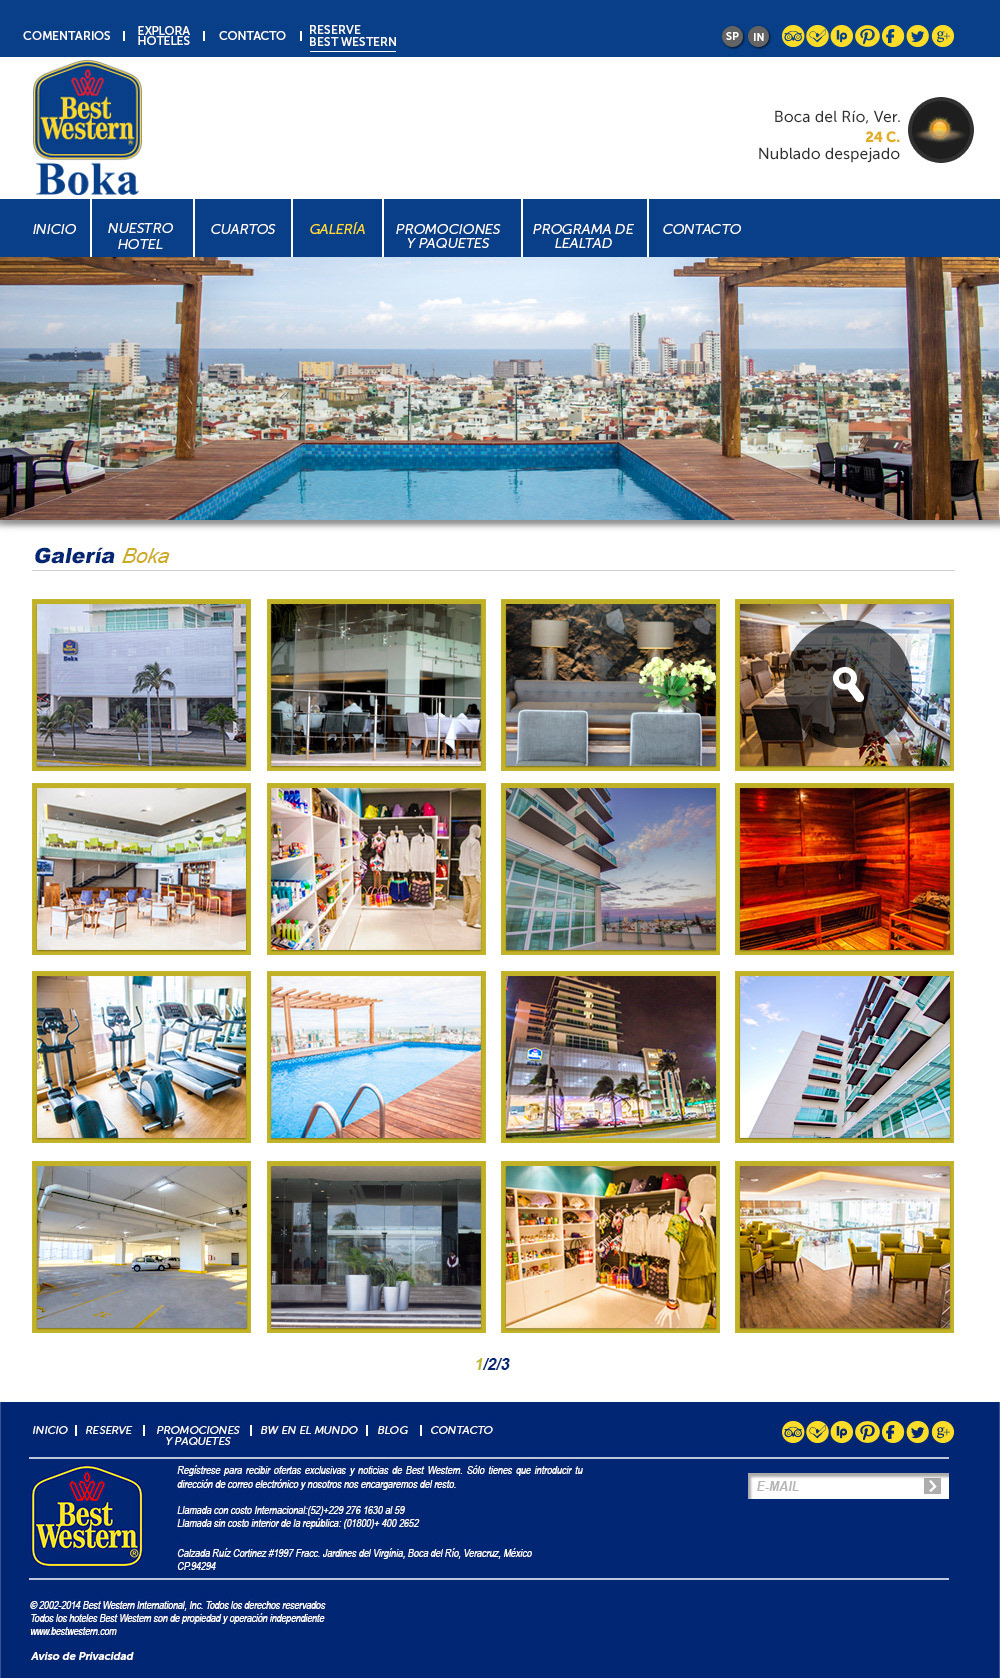 Web design photo mexico veracruz hotel wacom photoshop vector